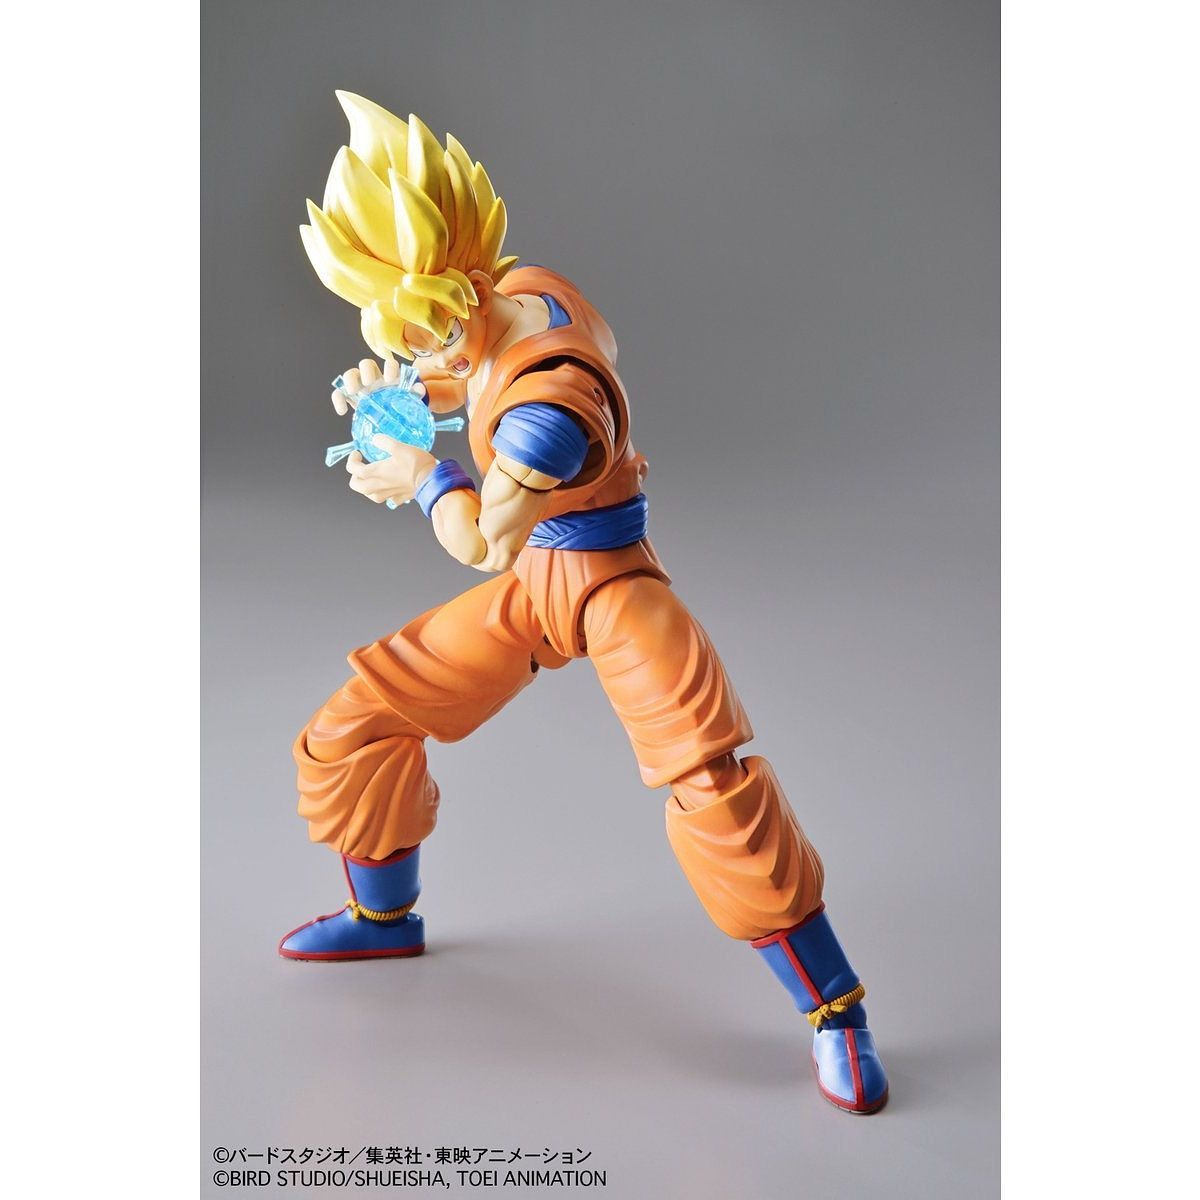 Figure-rise Standard - DBZ: Super Saiyan Son Goku (Renewal)